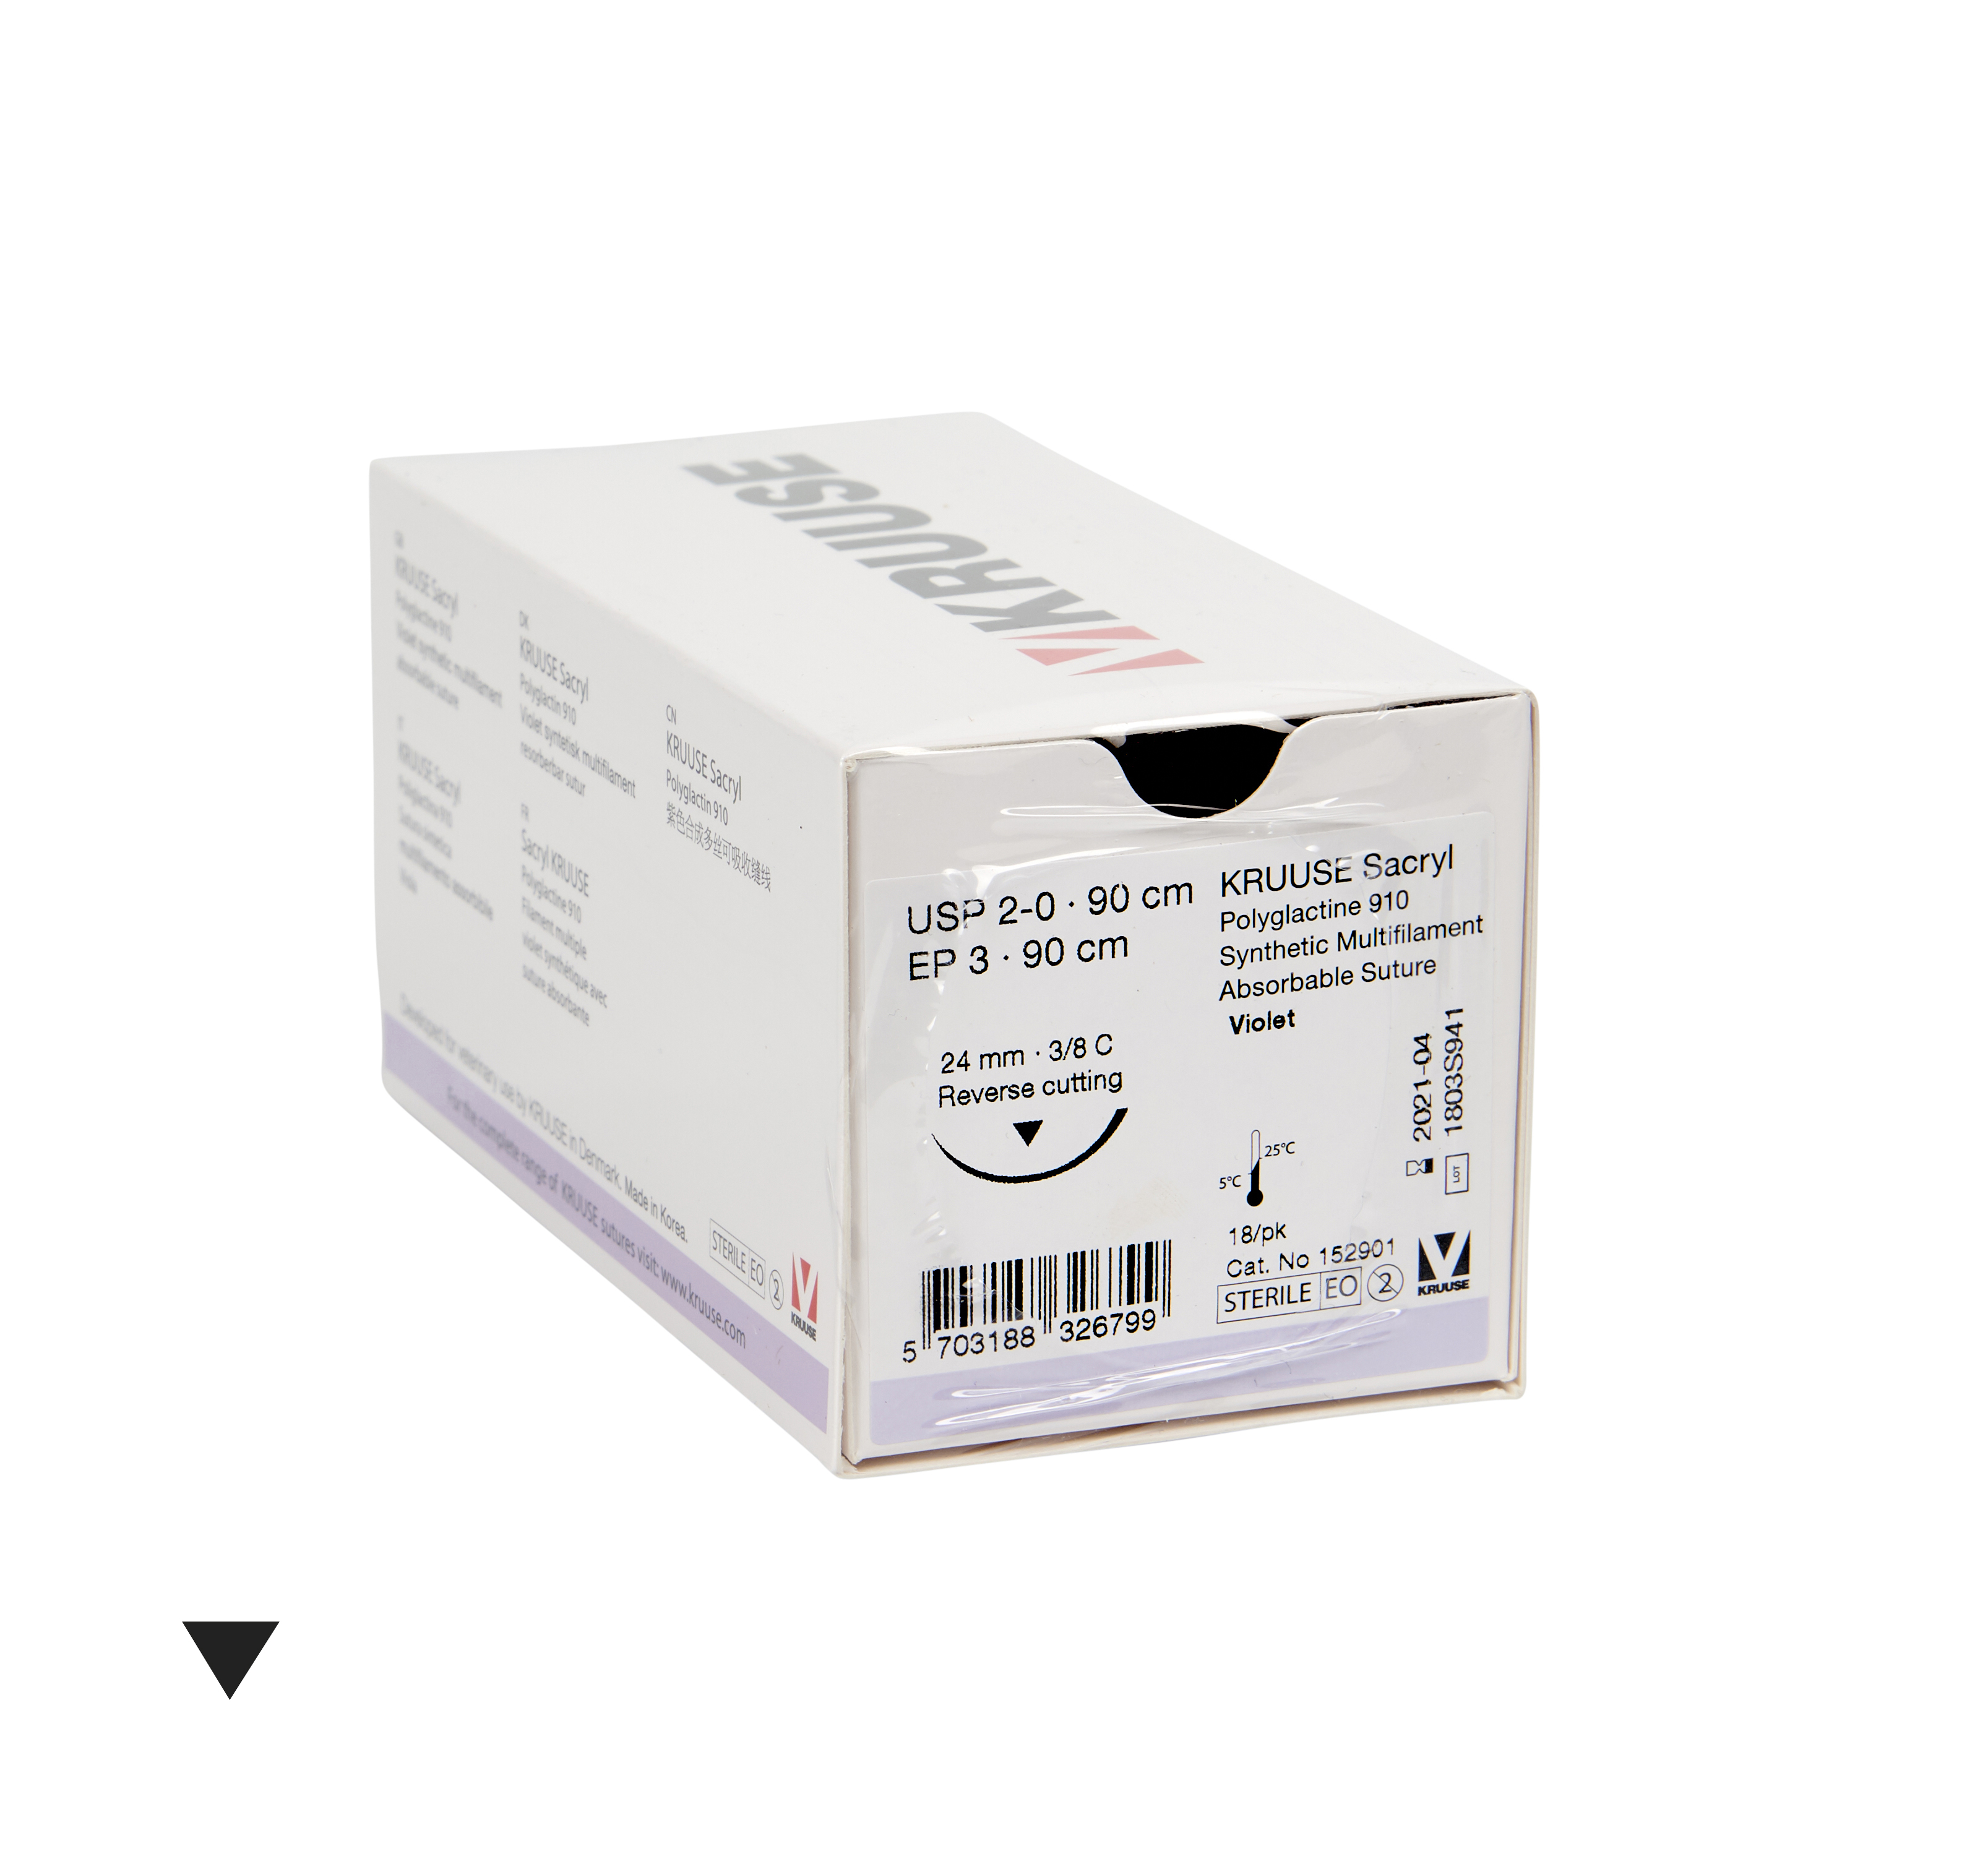 KRUUSE Sacryl Suture, USP 2-0/EP 3, 90 cm, violet, needle: 24 mm, 3/8 C, RC, 18/pk